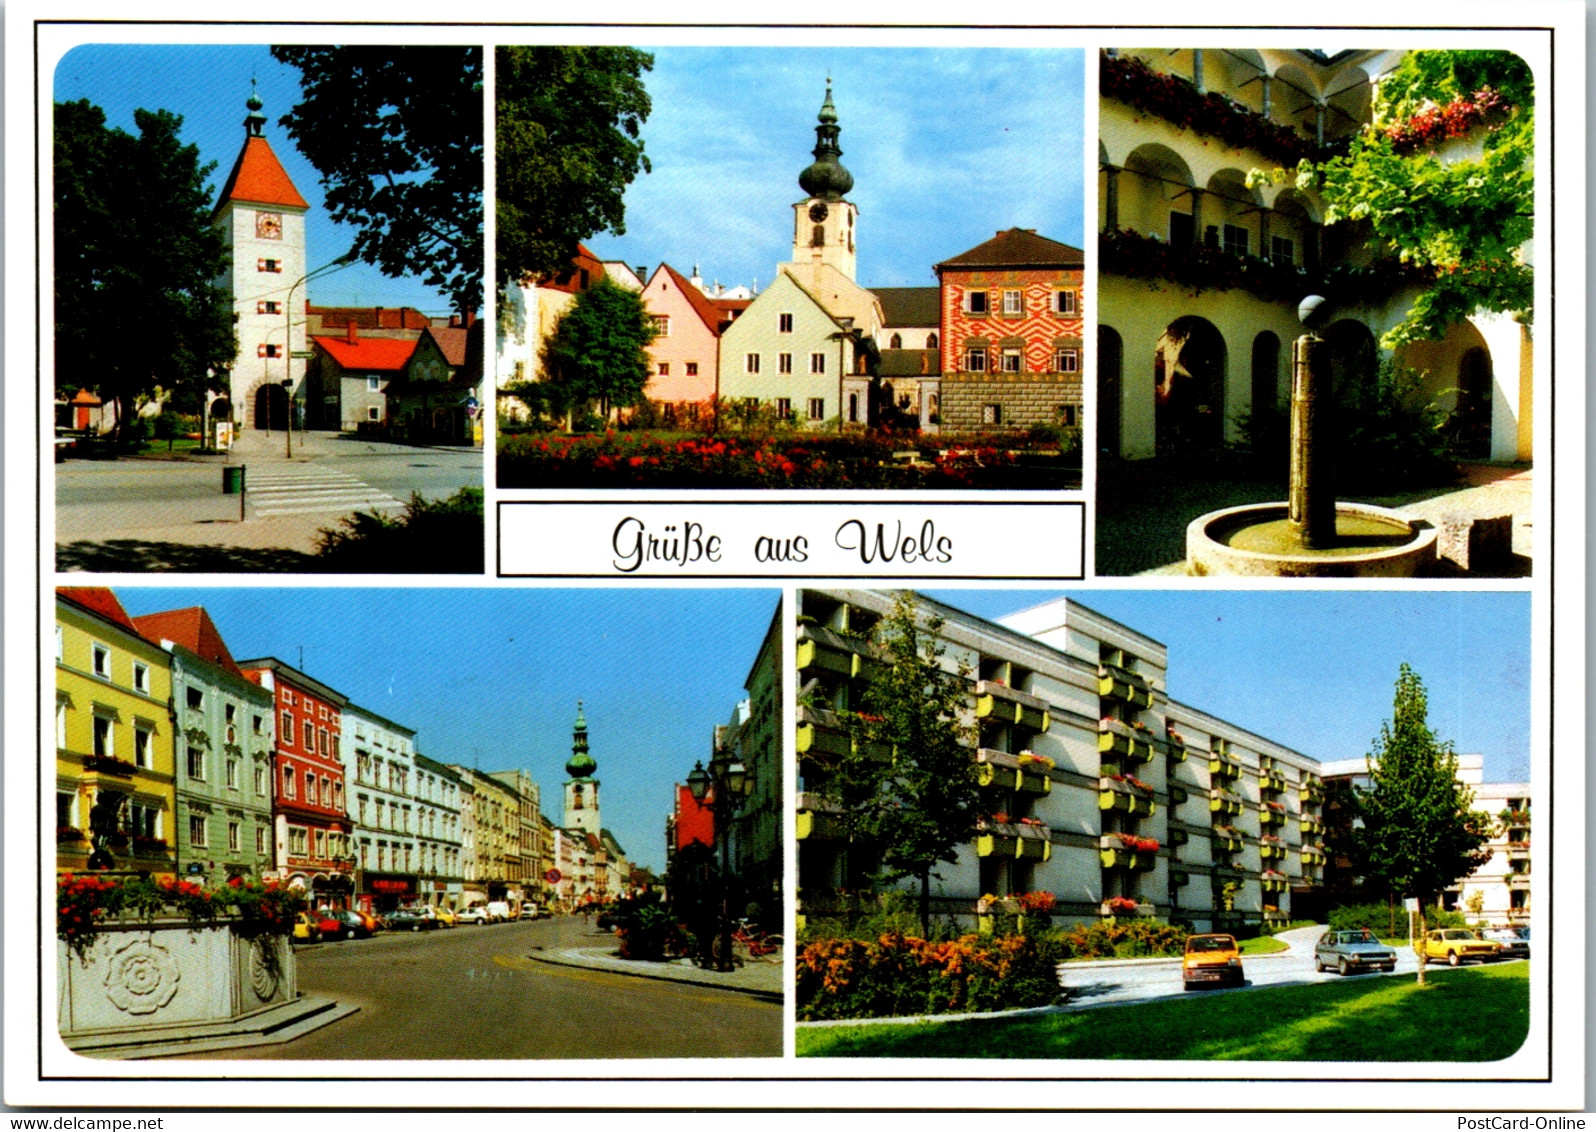 36883 - Oberösterreich - Wels , Ledererturm , Blick V. Burggarten Zur Pfarrkirche , Haas Hof Stadtplatz , Seniorenheim - - Wels